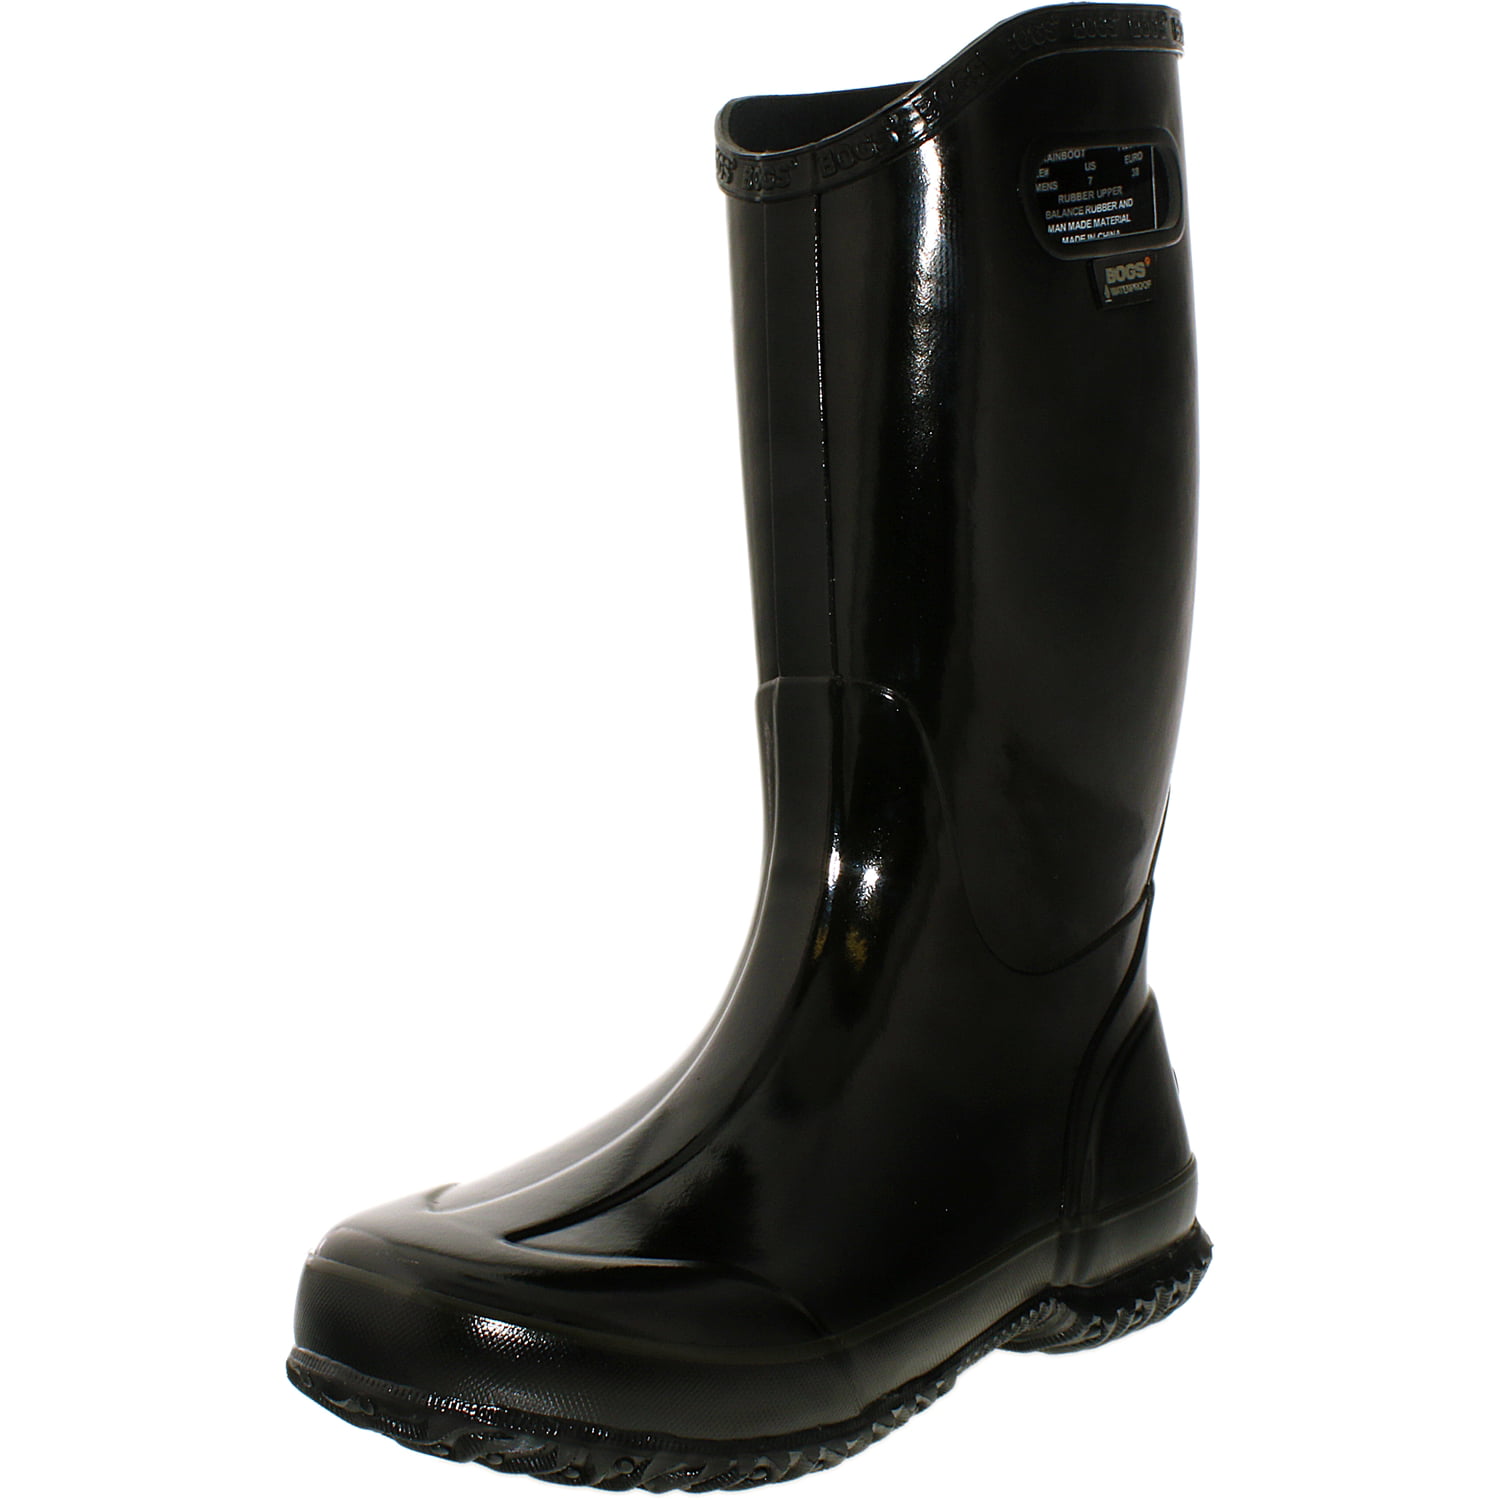 Bogs Women's Classic Rainboot Black Mid-Calf Rubber Rain Boot - 7M ...